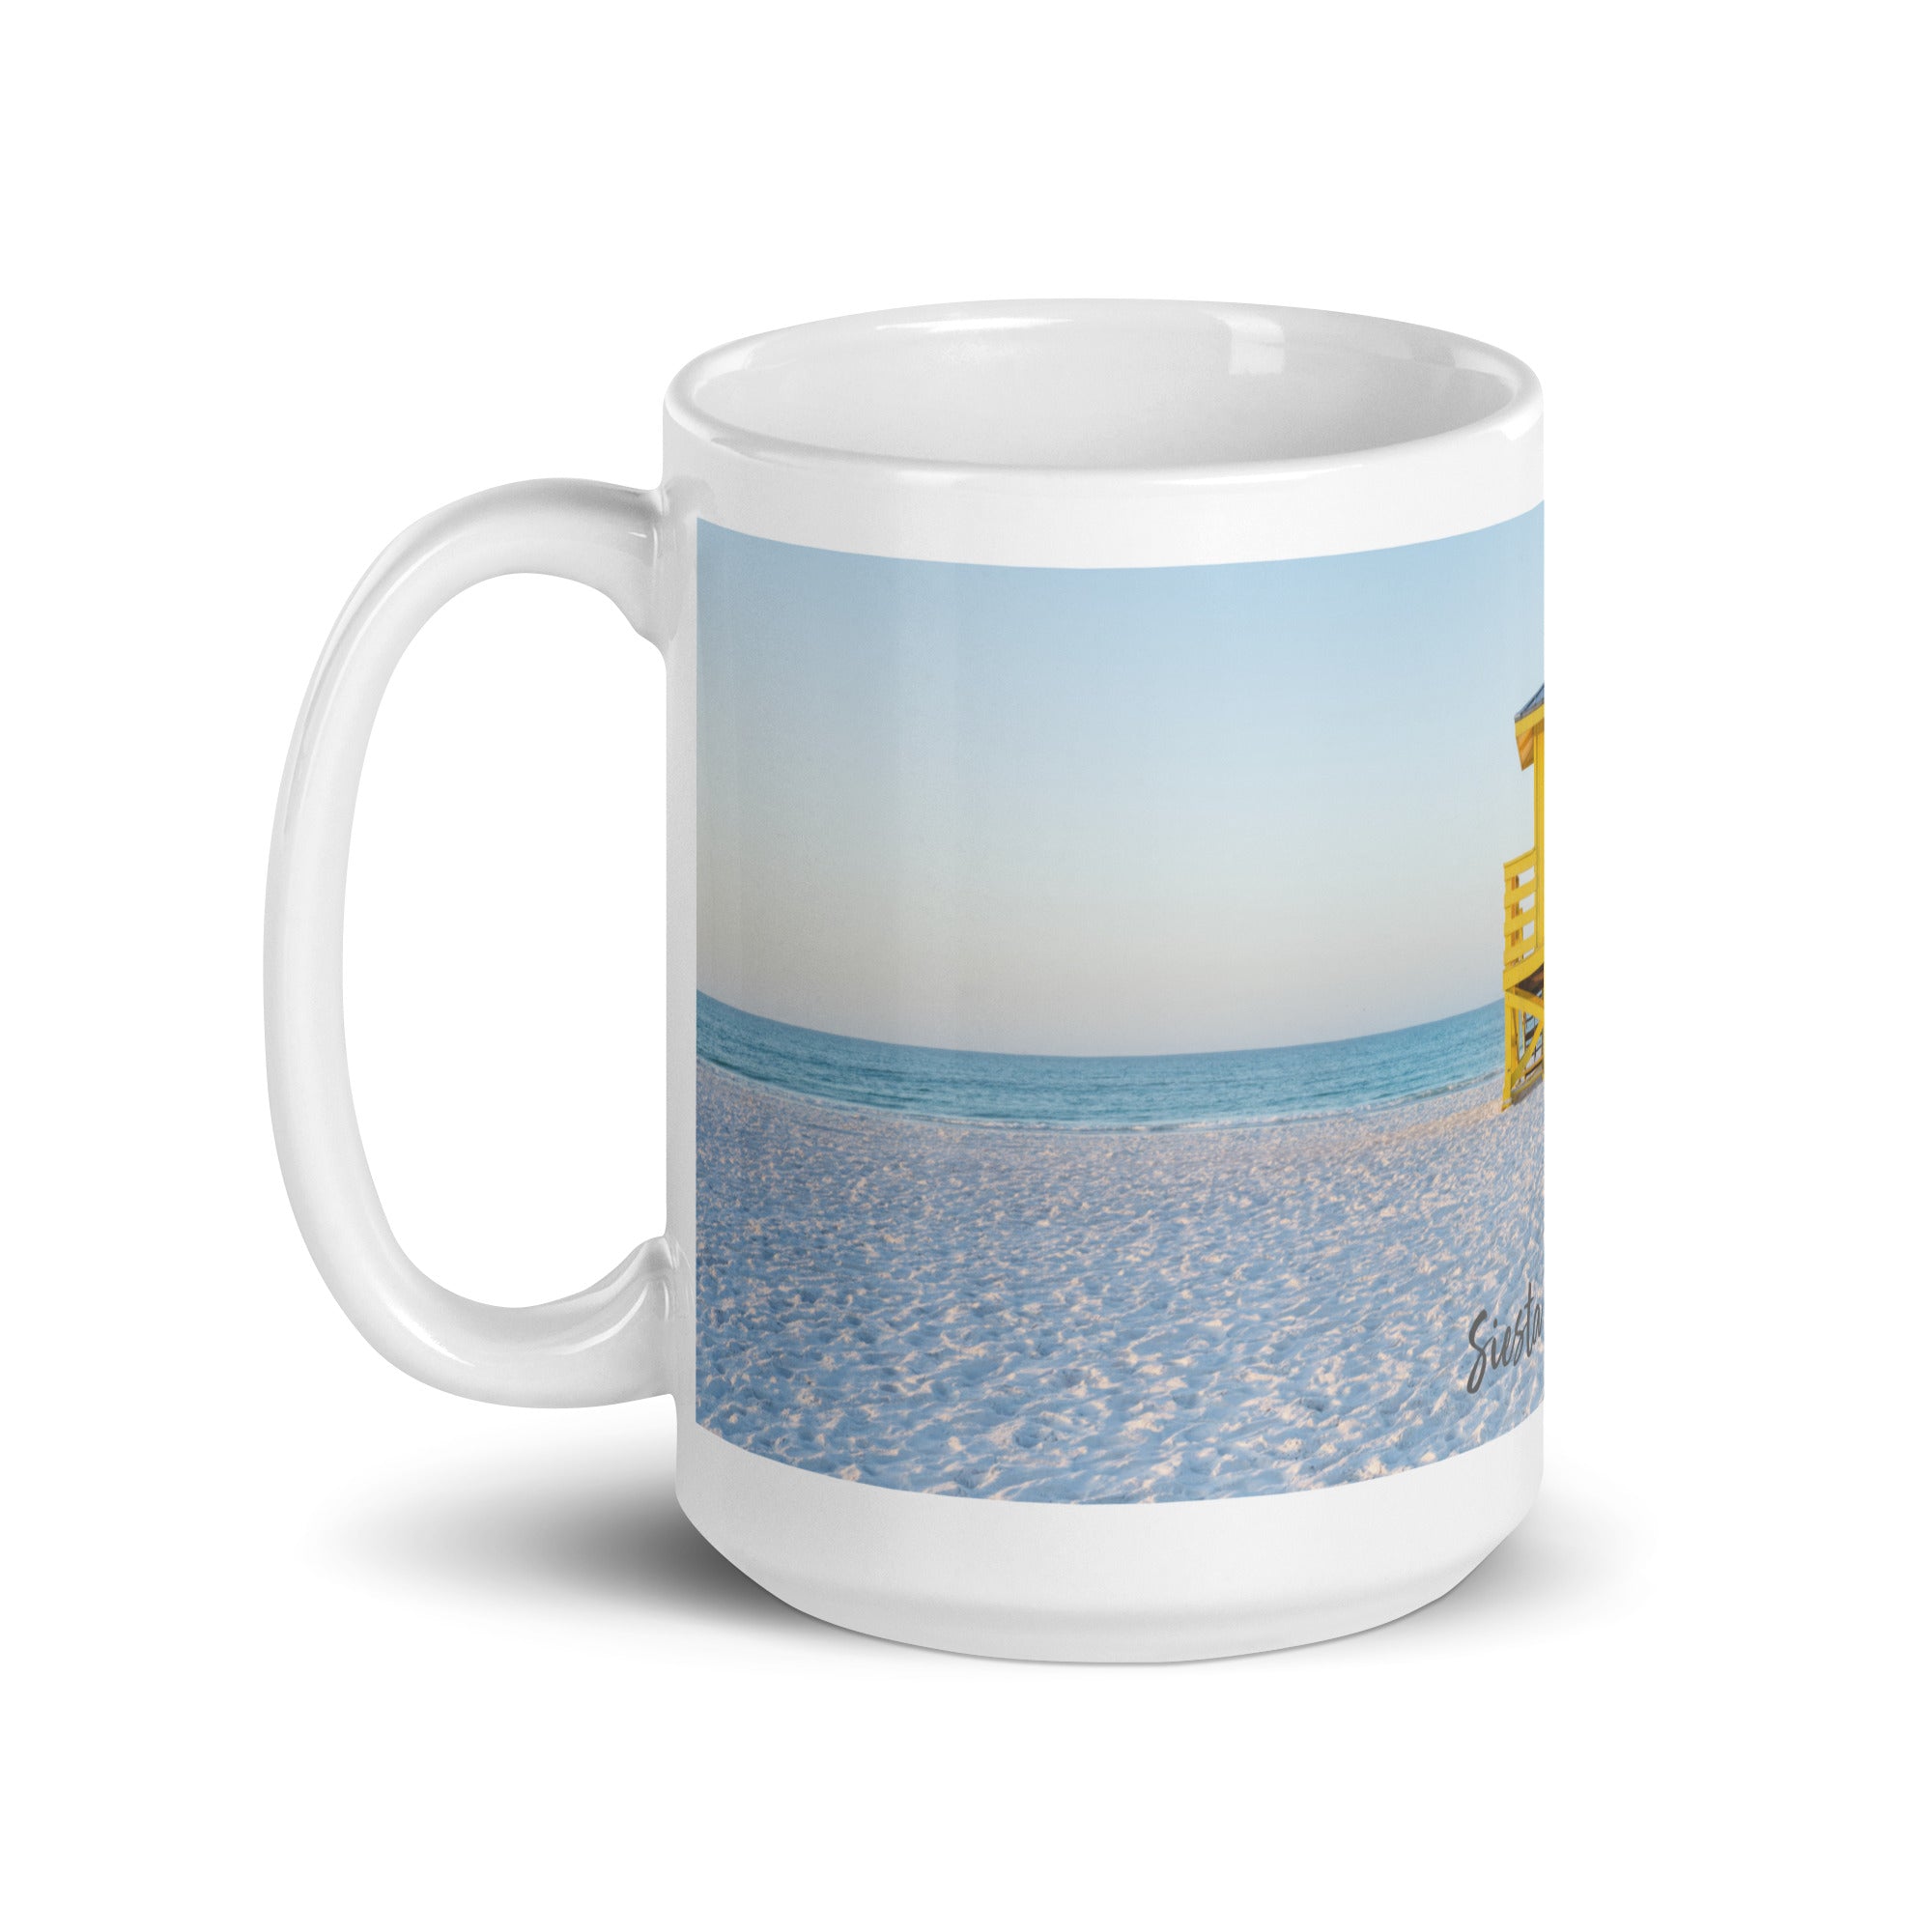 Yellow Lifeguard Stand Coffee Mug - Siesta Key Beach